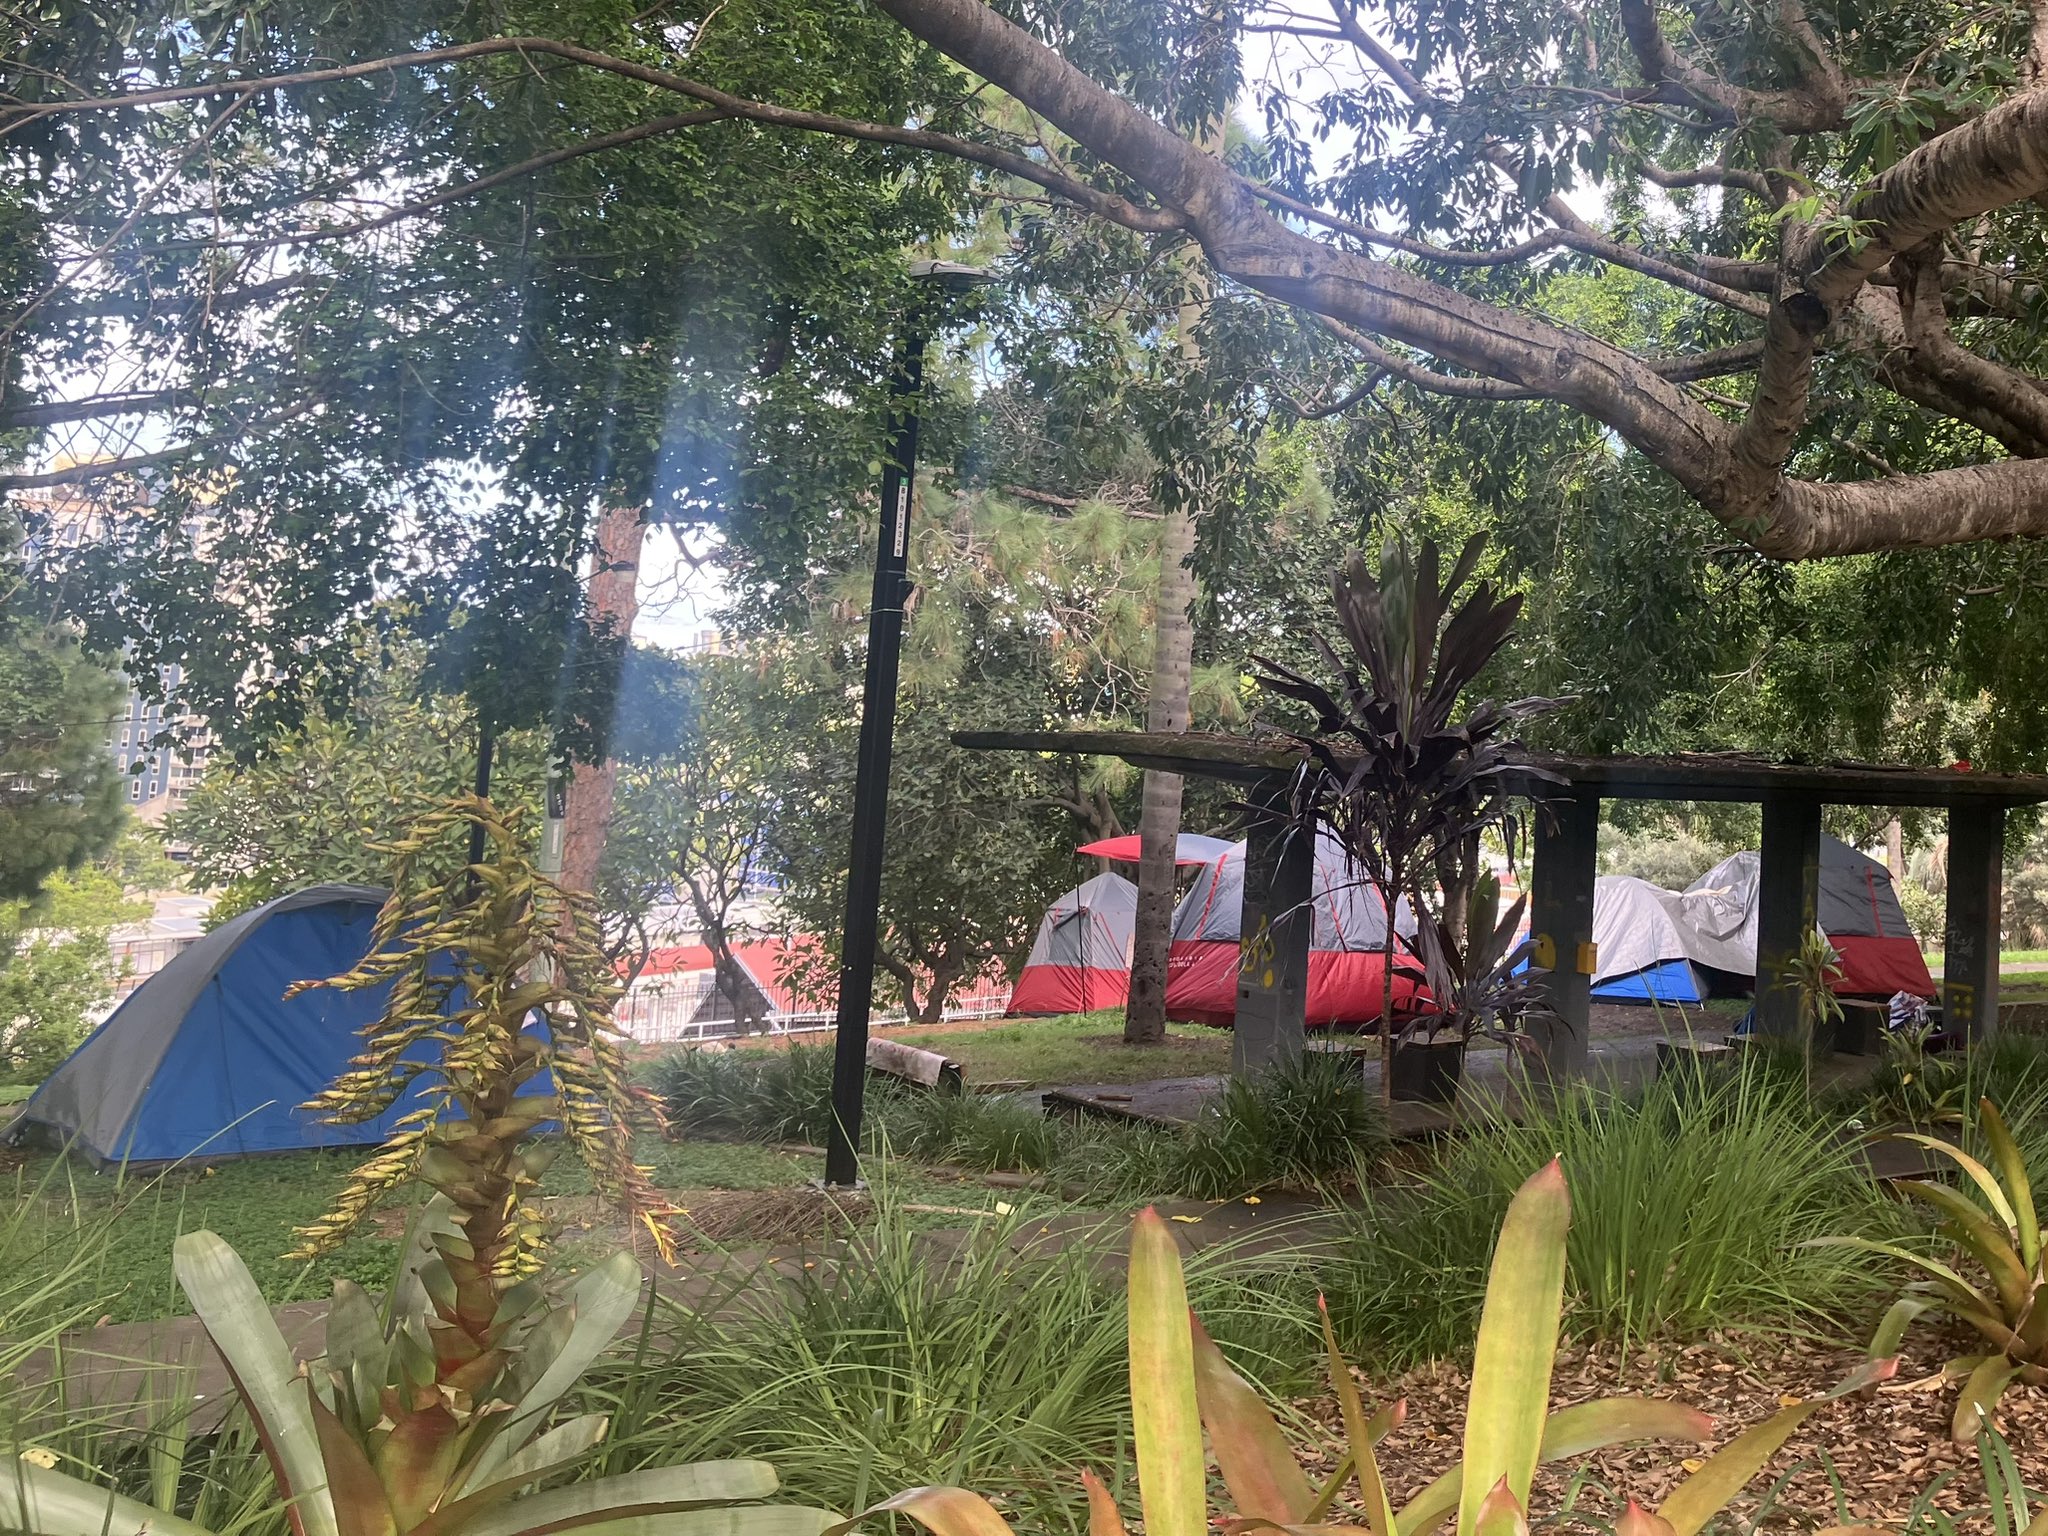 Brisbane tent city homelessness housing crisis immigration